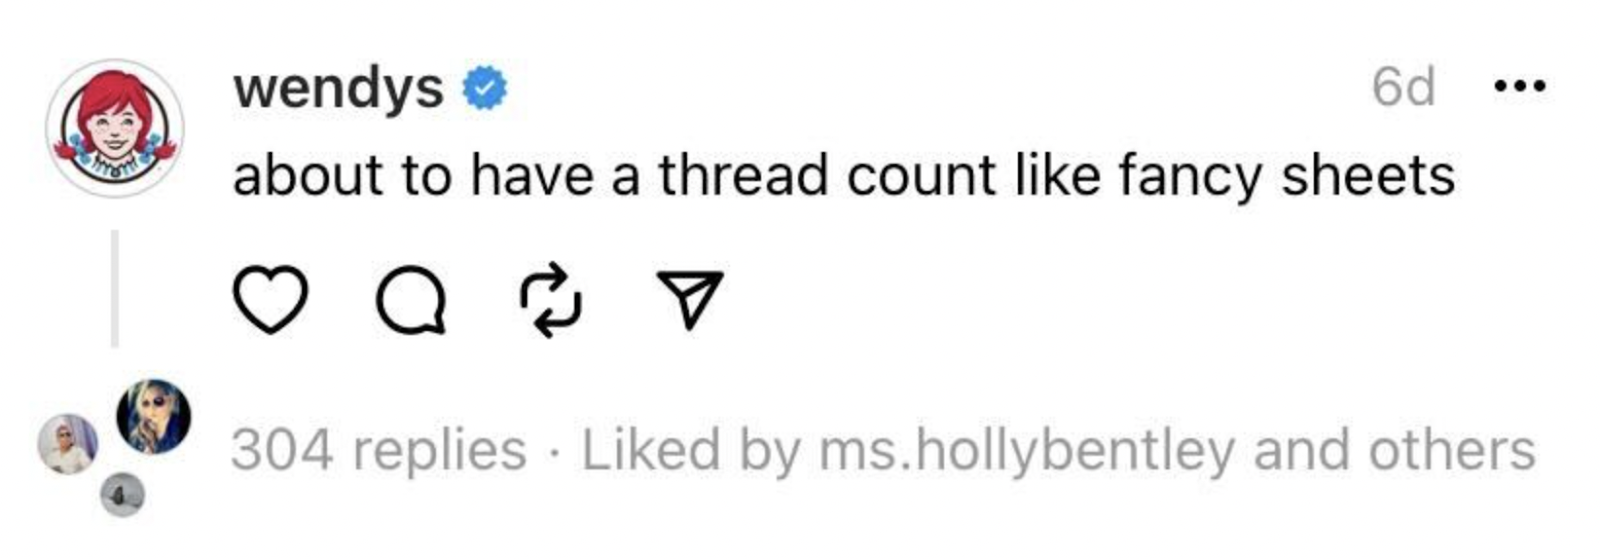 Wendy'S Post On Threads